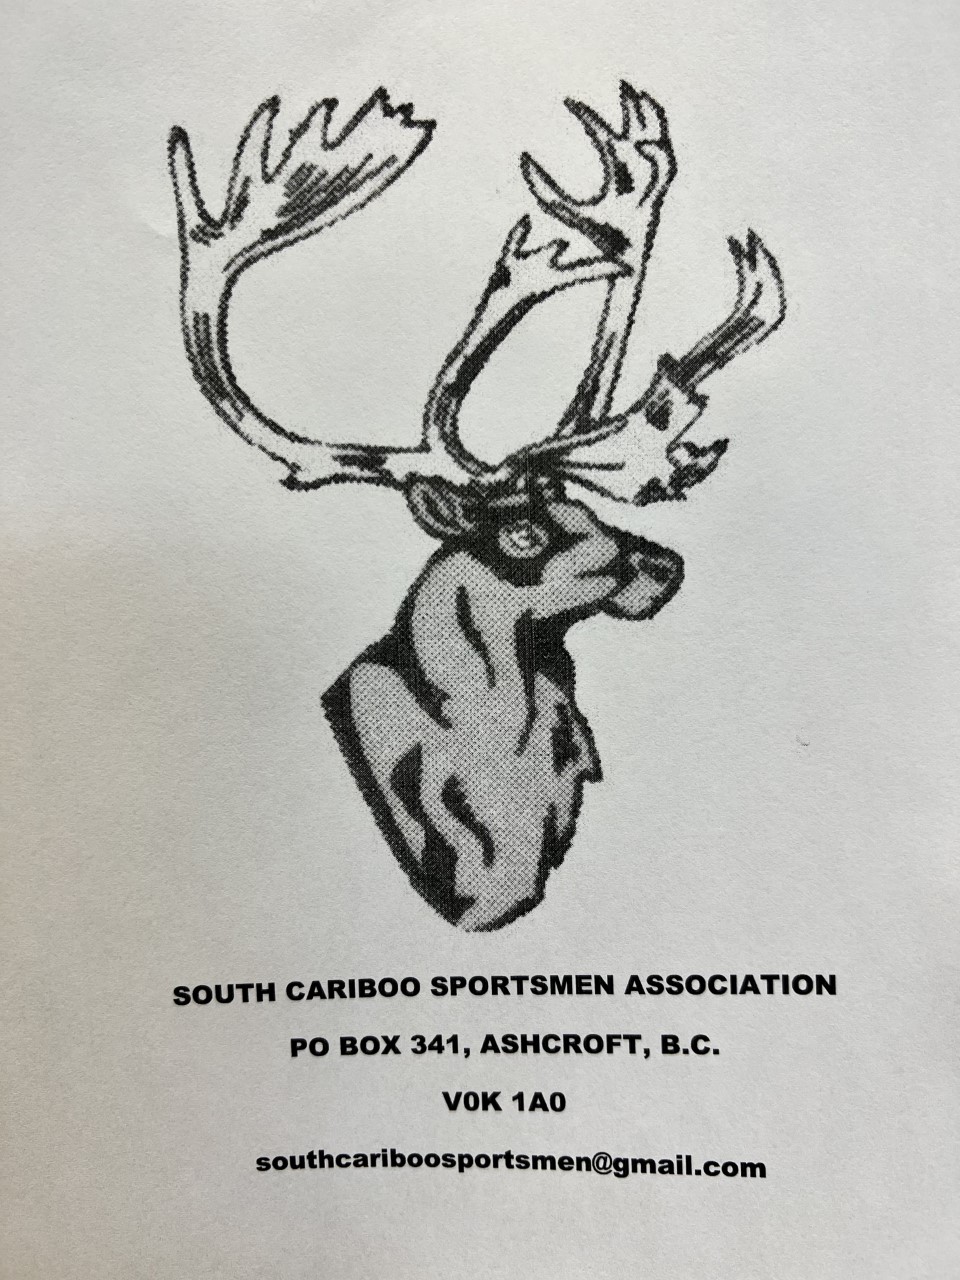 South Cariboo Sportsmen Association